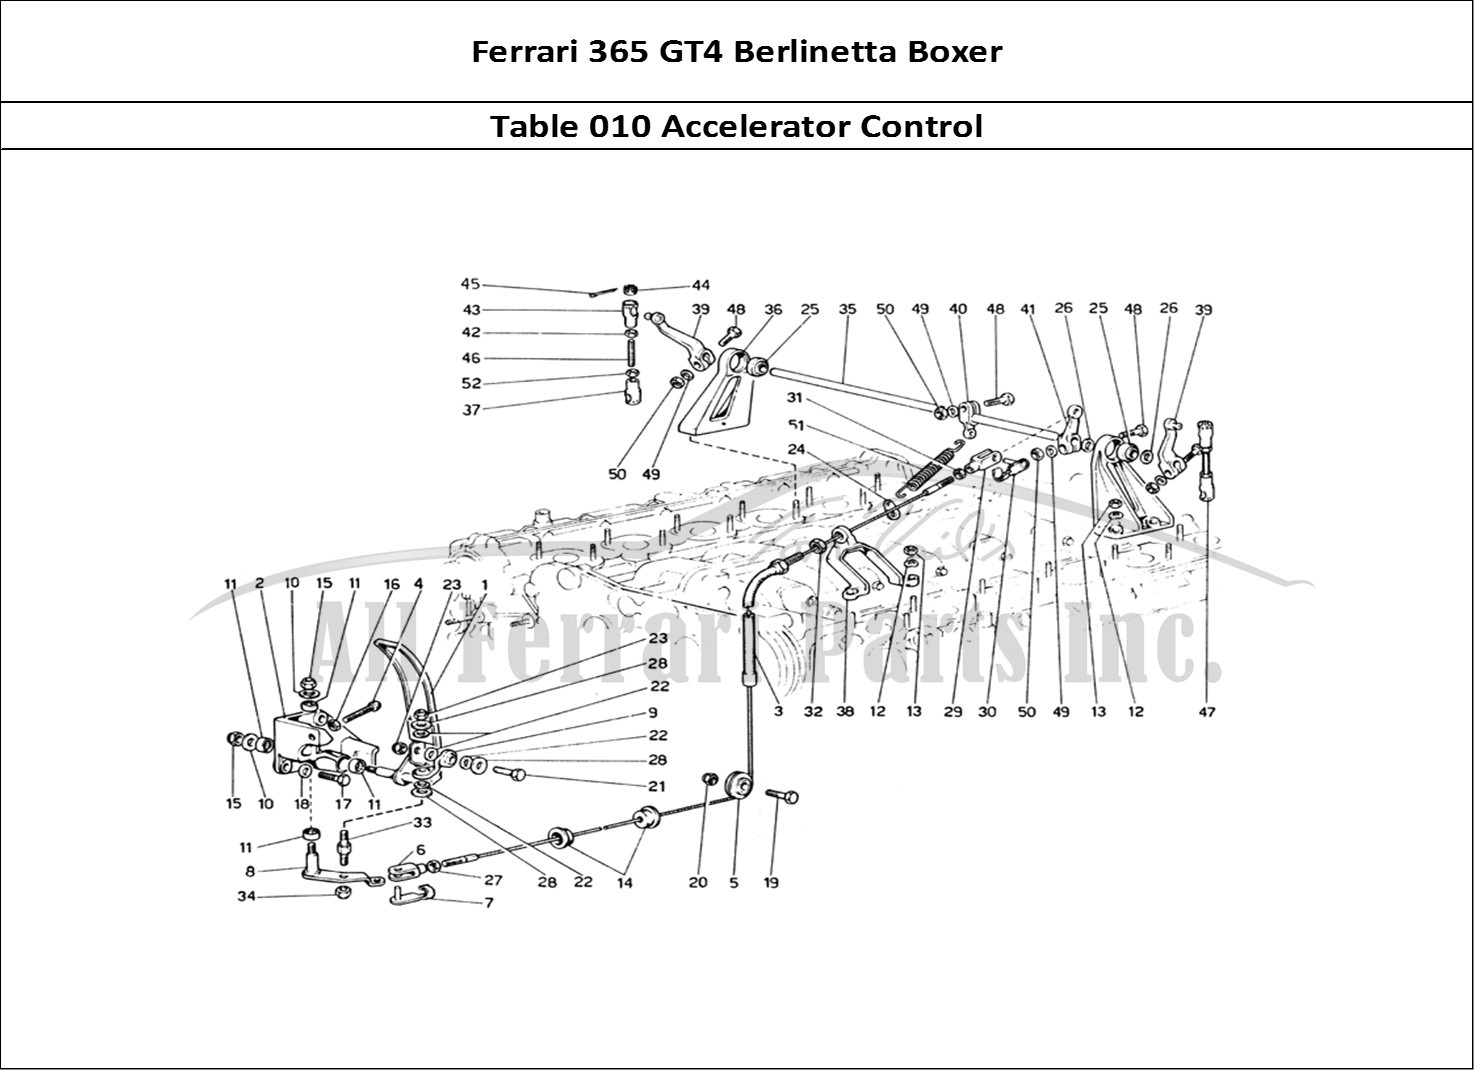 Ferrari Parts Ferrari 365 GT4 Berlinetta Boxer Page 010 Throttle Control